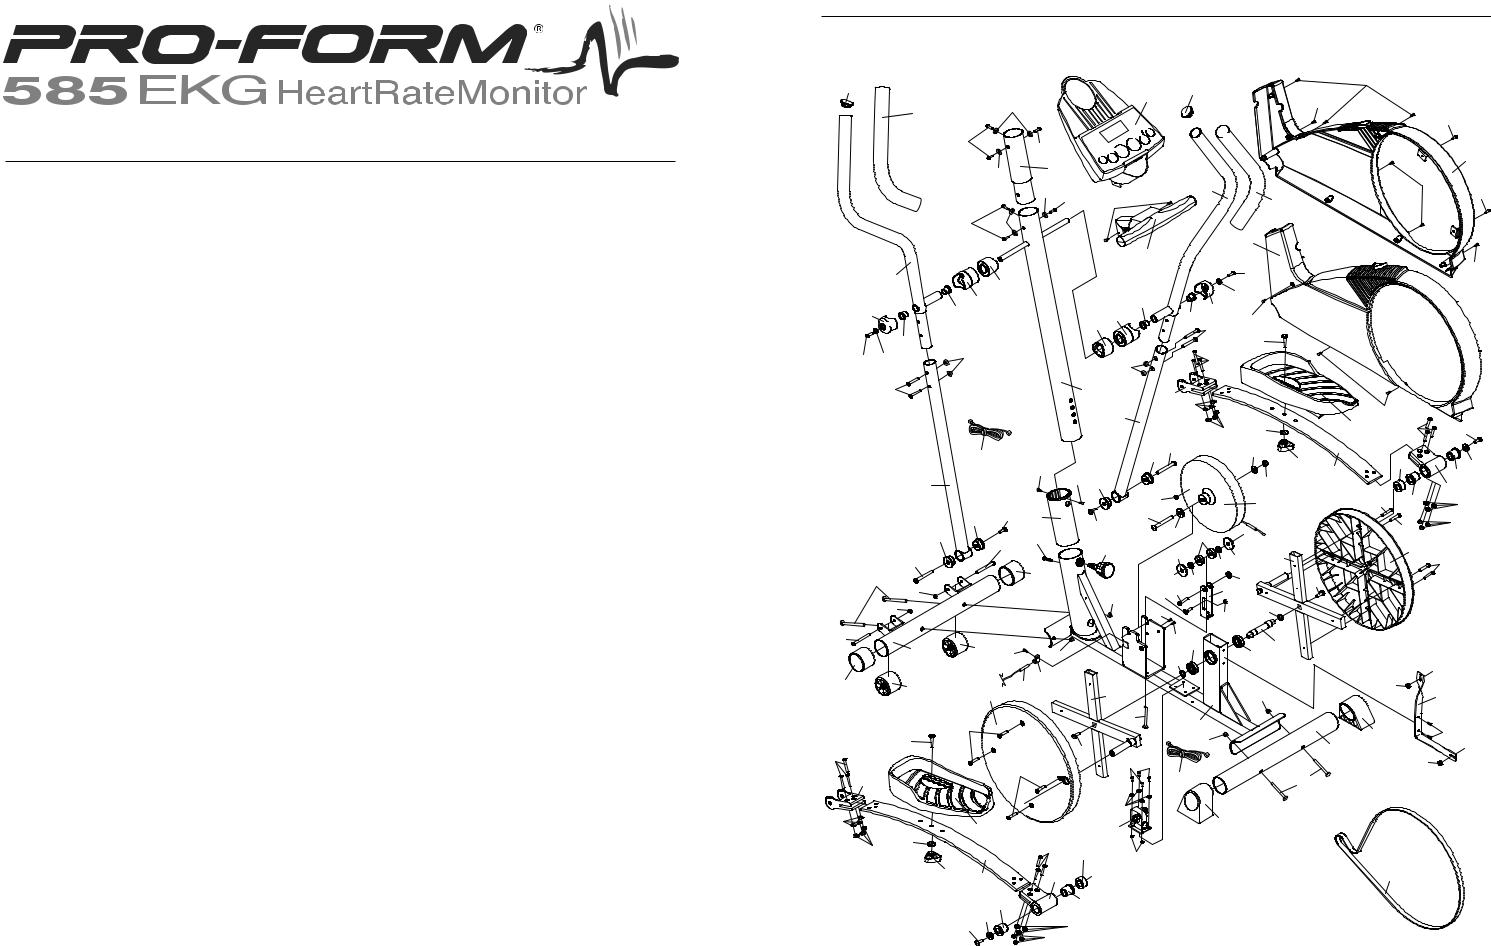 ProForm 585 EKG User Manual